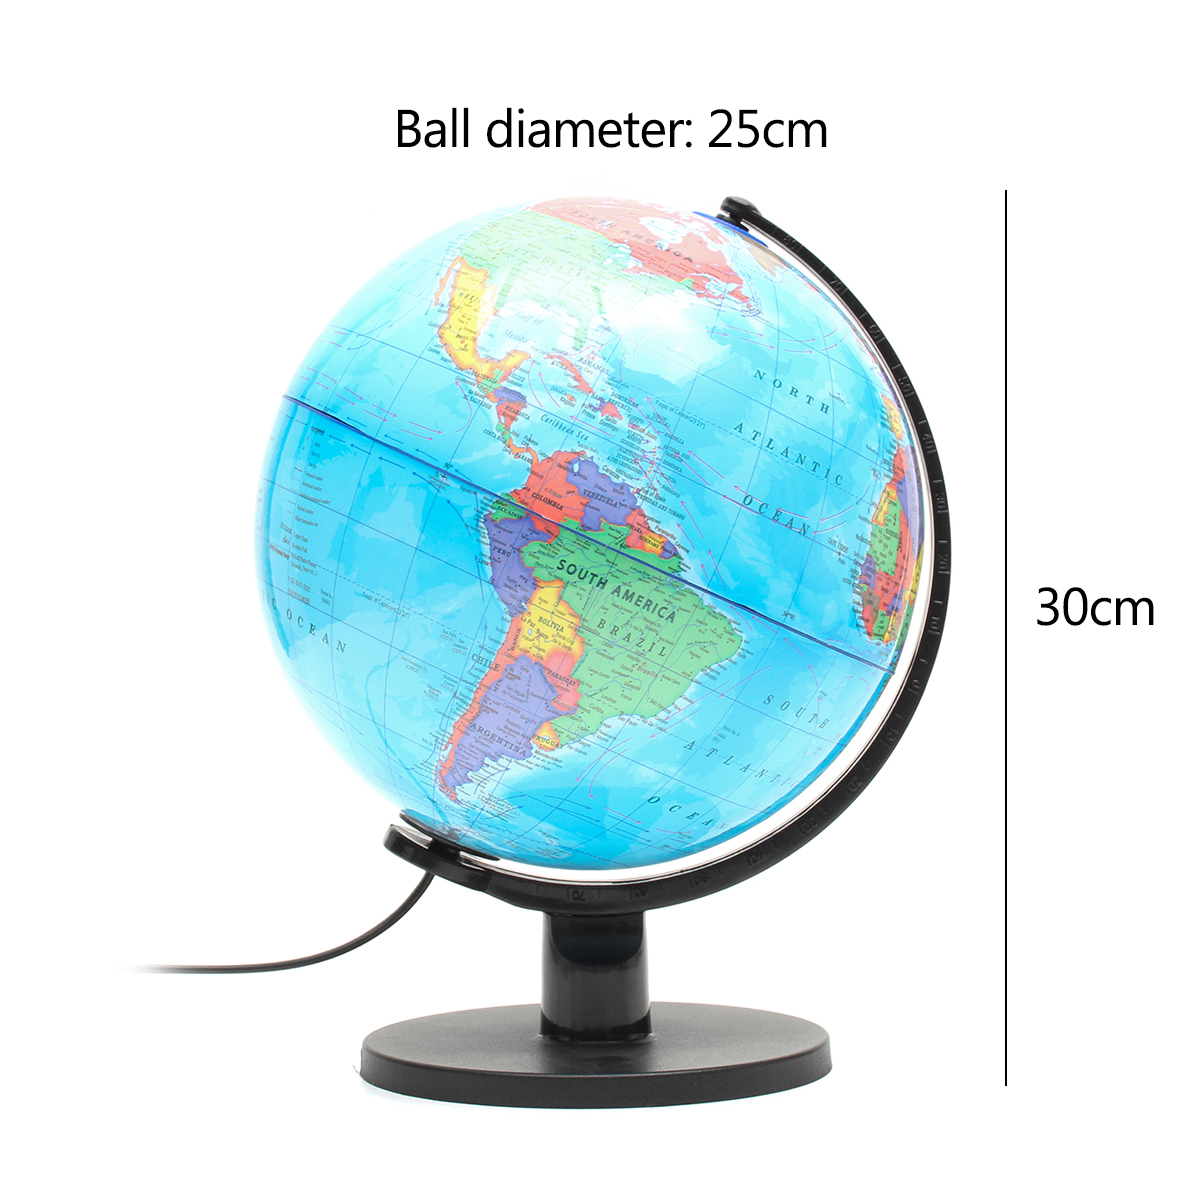 25cm-110V-World-Globe-Night-Light-Geography-LED-Lamp-Kids-Bedroom-Decor-Gift-US-Plug-1390550-9